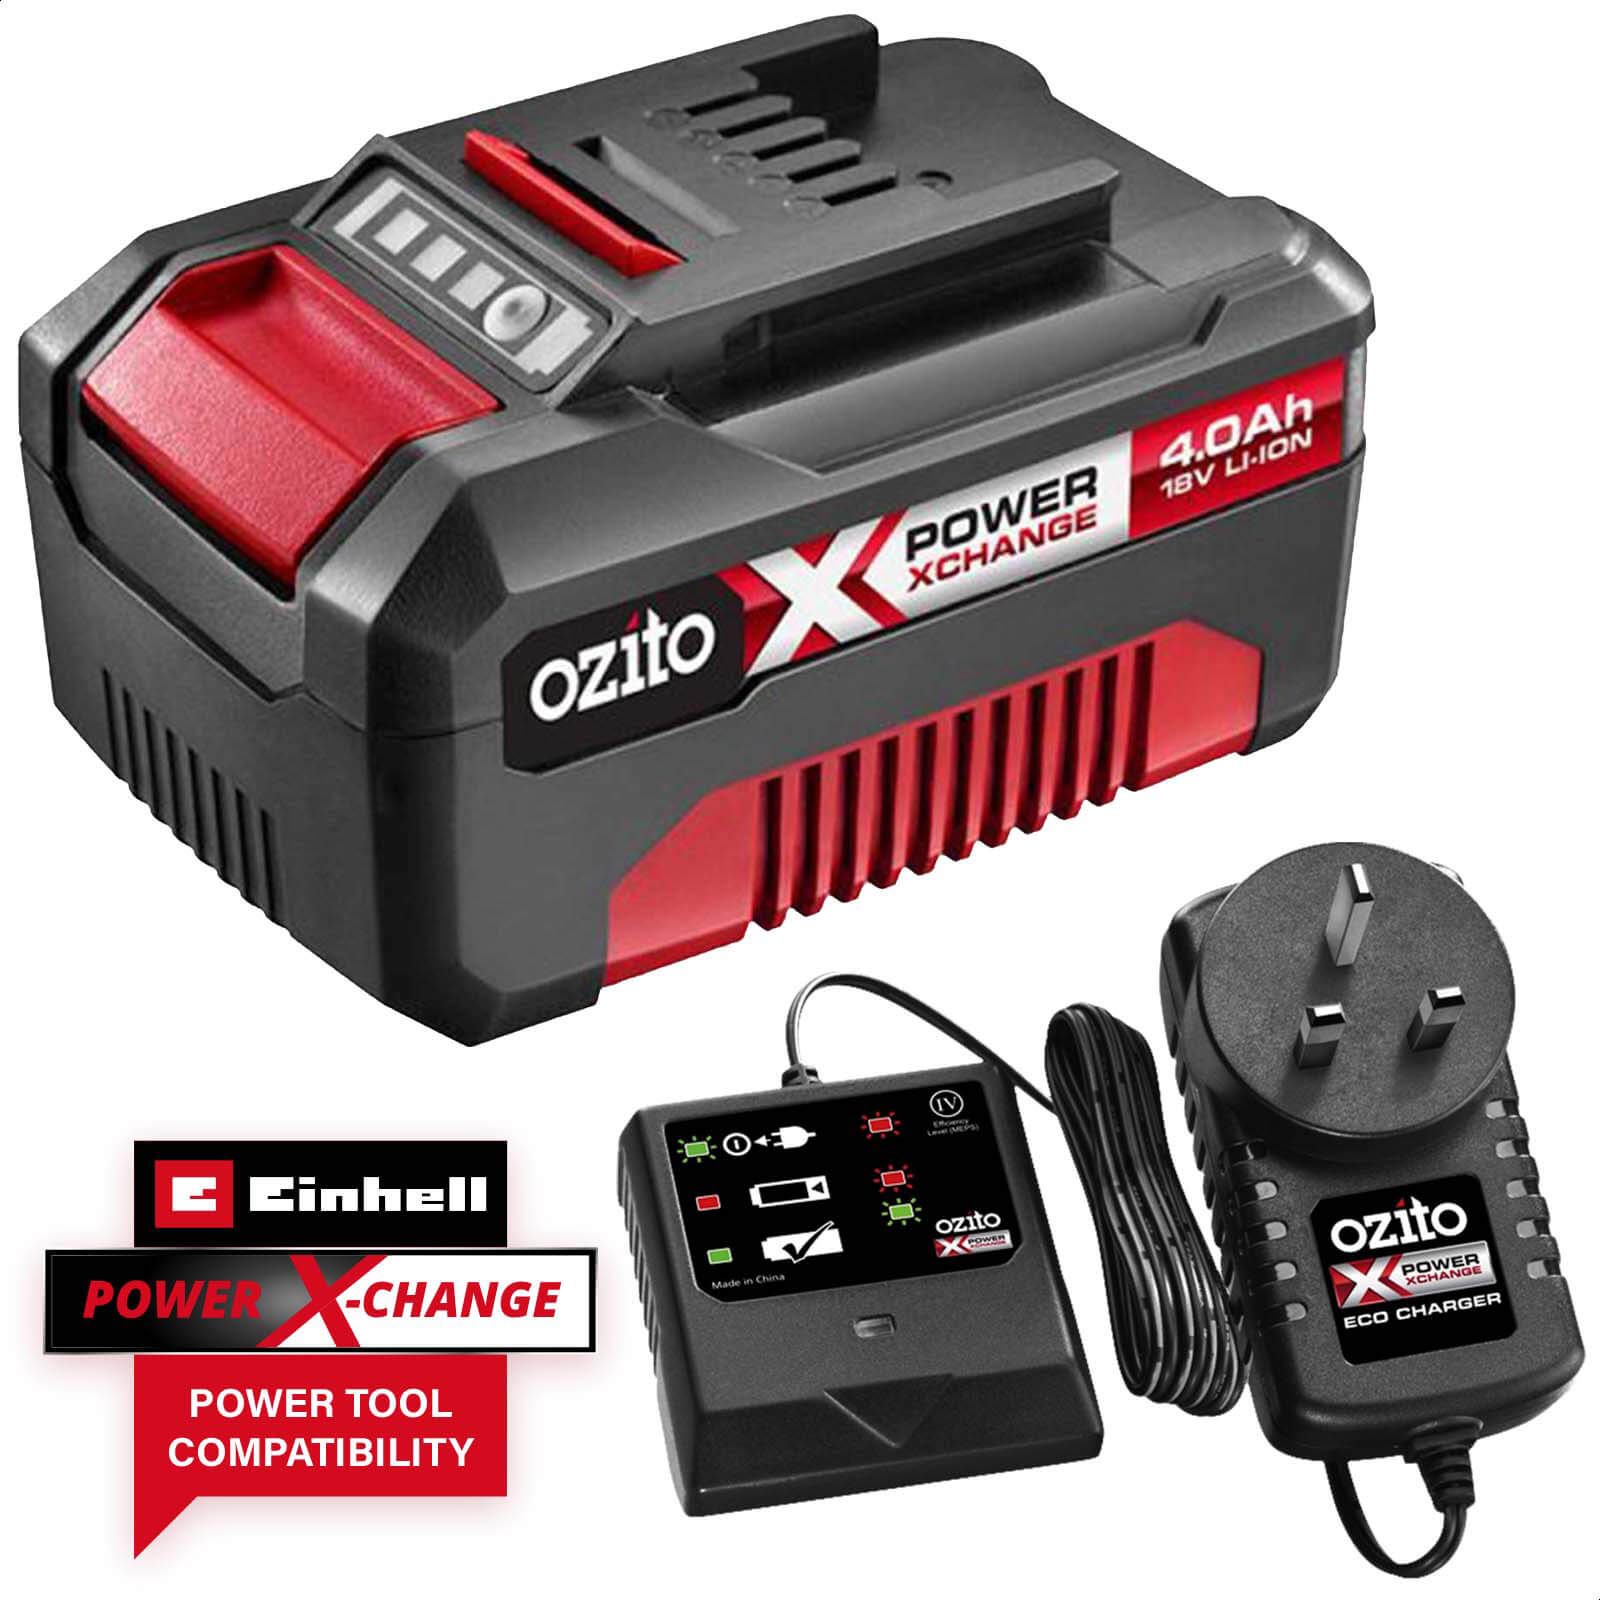 Photos - Power Tool Battery Ozito Genuine 18v Cordless Power X-Change Li-ion Battery 4ah and Eco Charg 